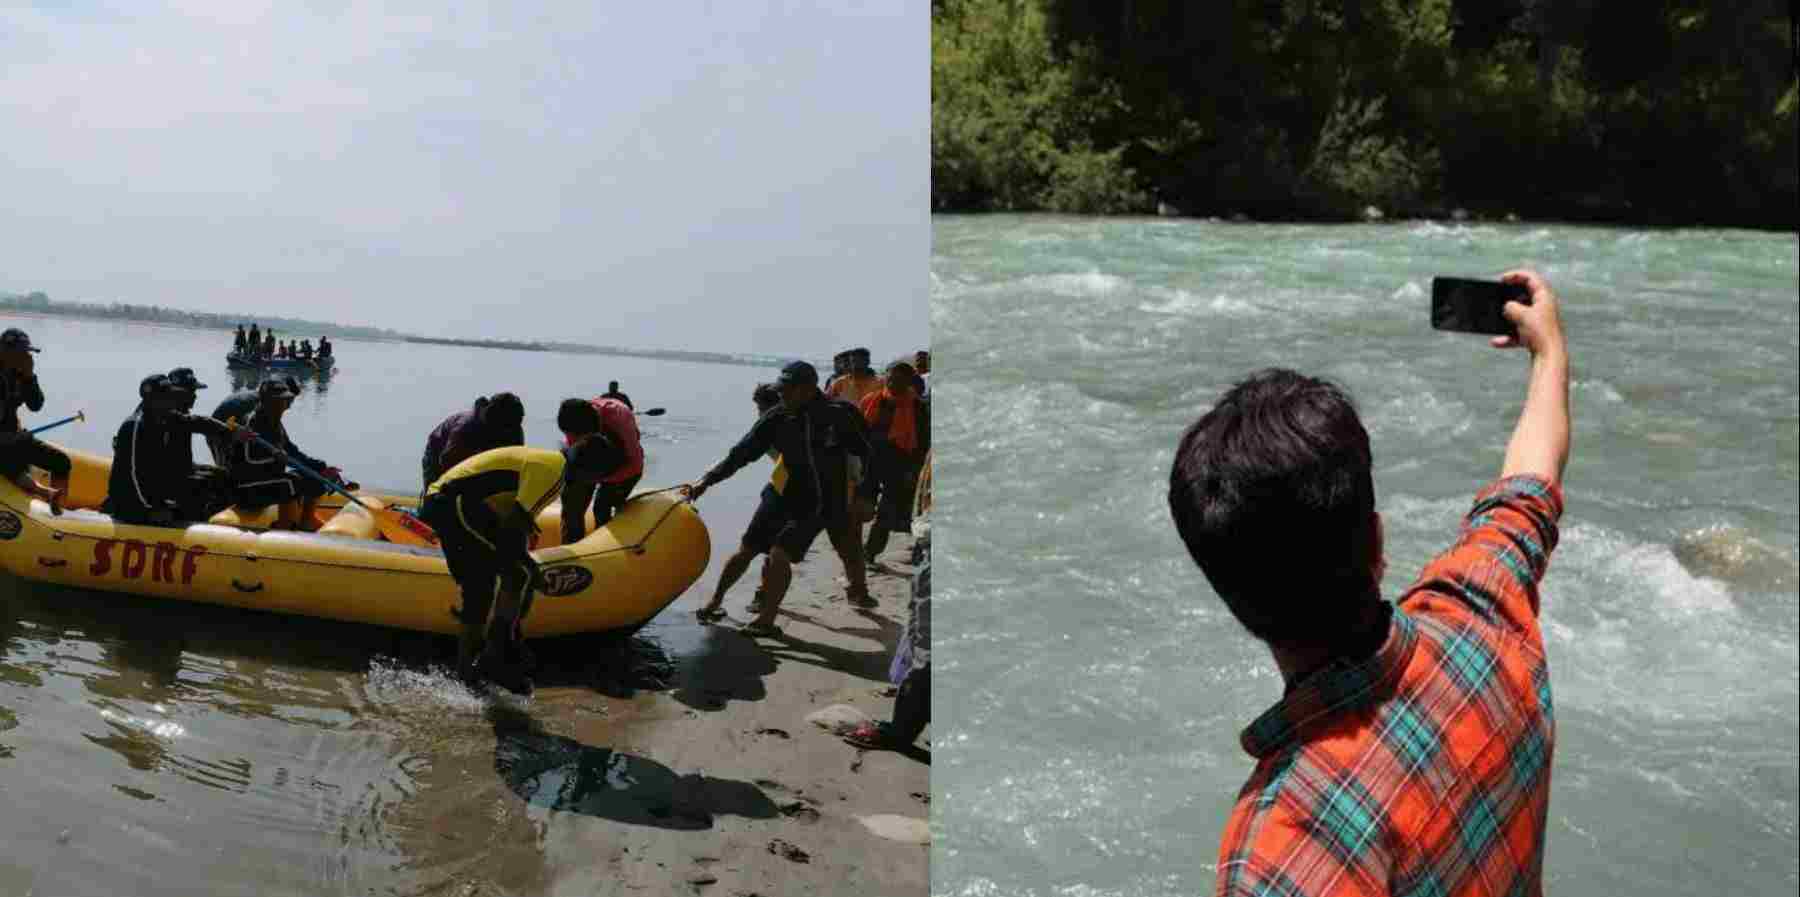 Uttarakhand news: Two real brothers Raju and Mukesh rajput drowned Sharda river while taking selfie at tanakpur Champawat. Sharda river tanakpur